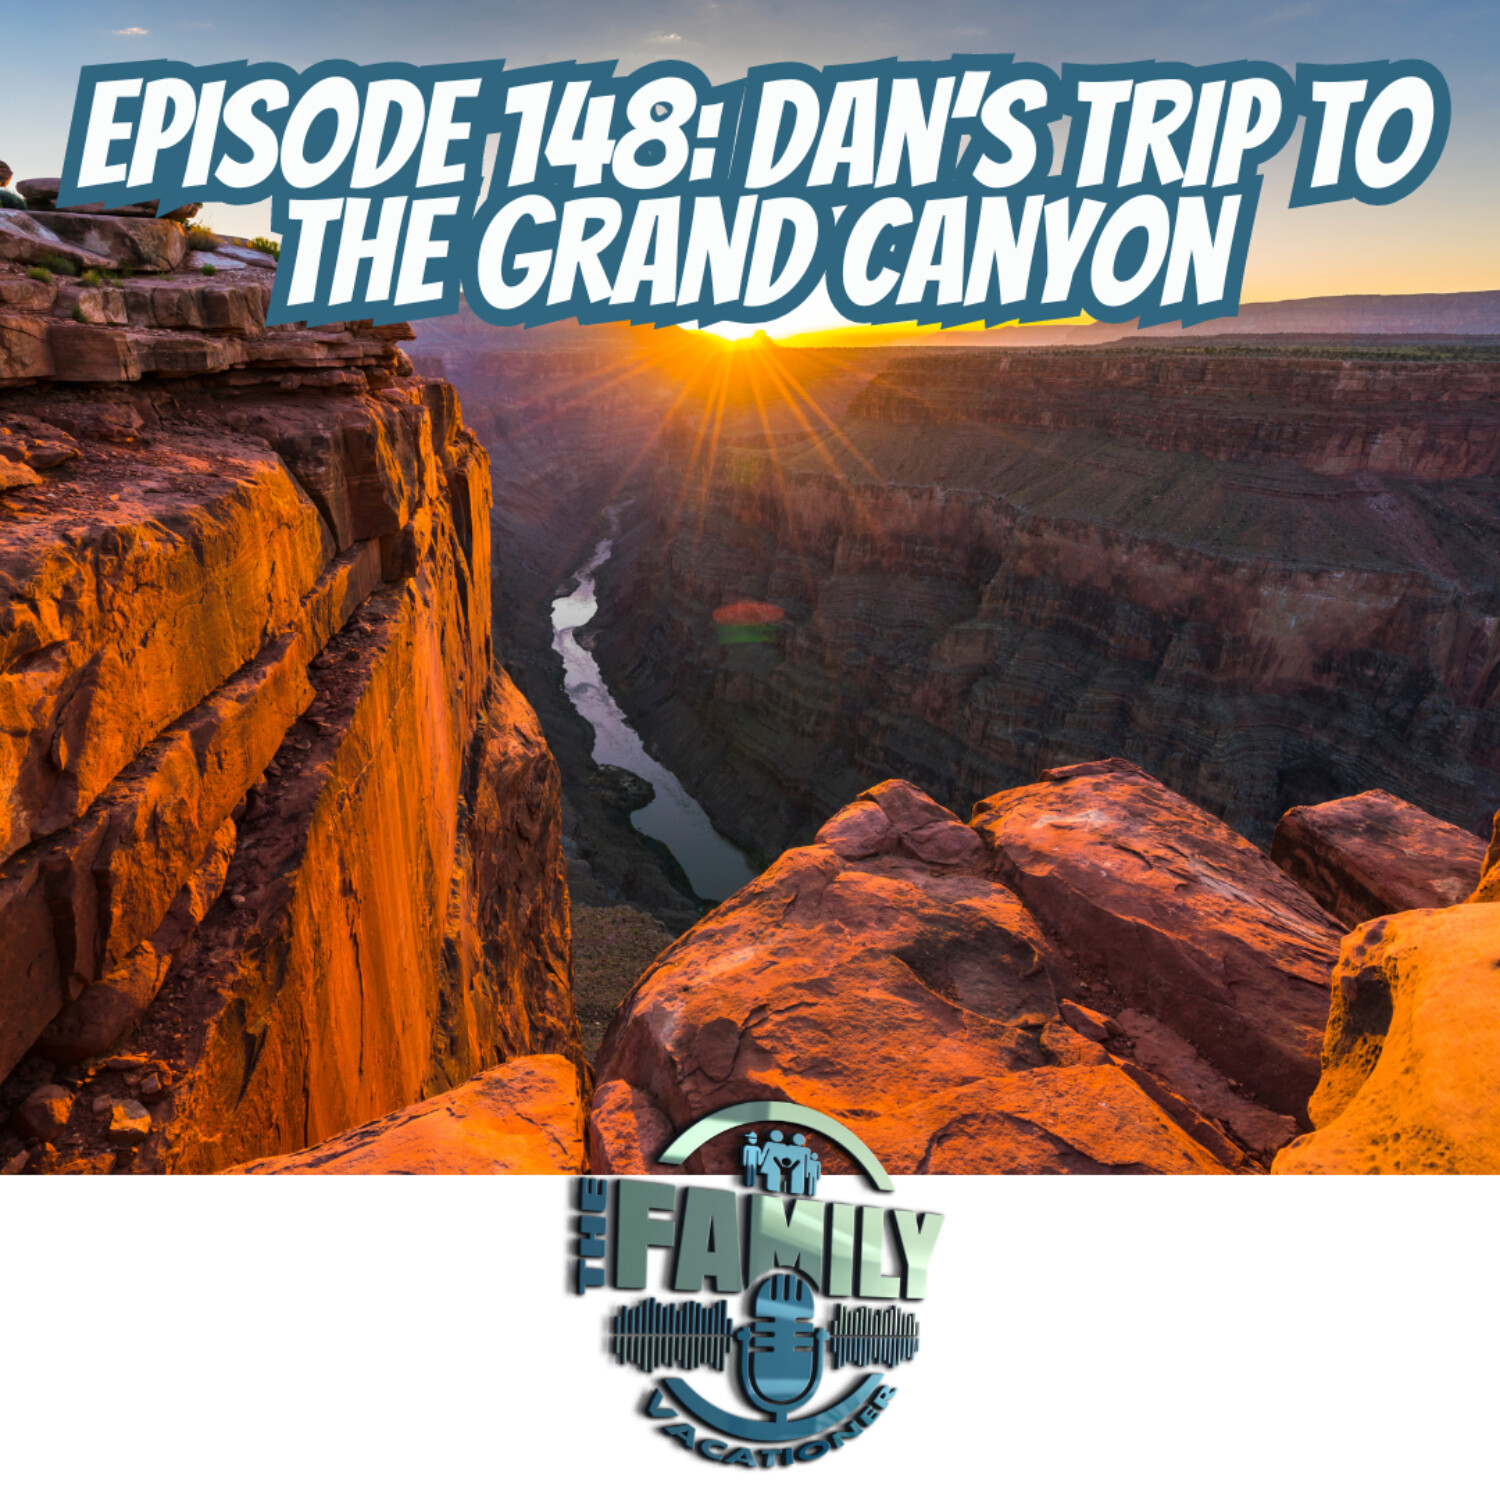 Dan’s Trip to the Grand Canyon